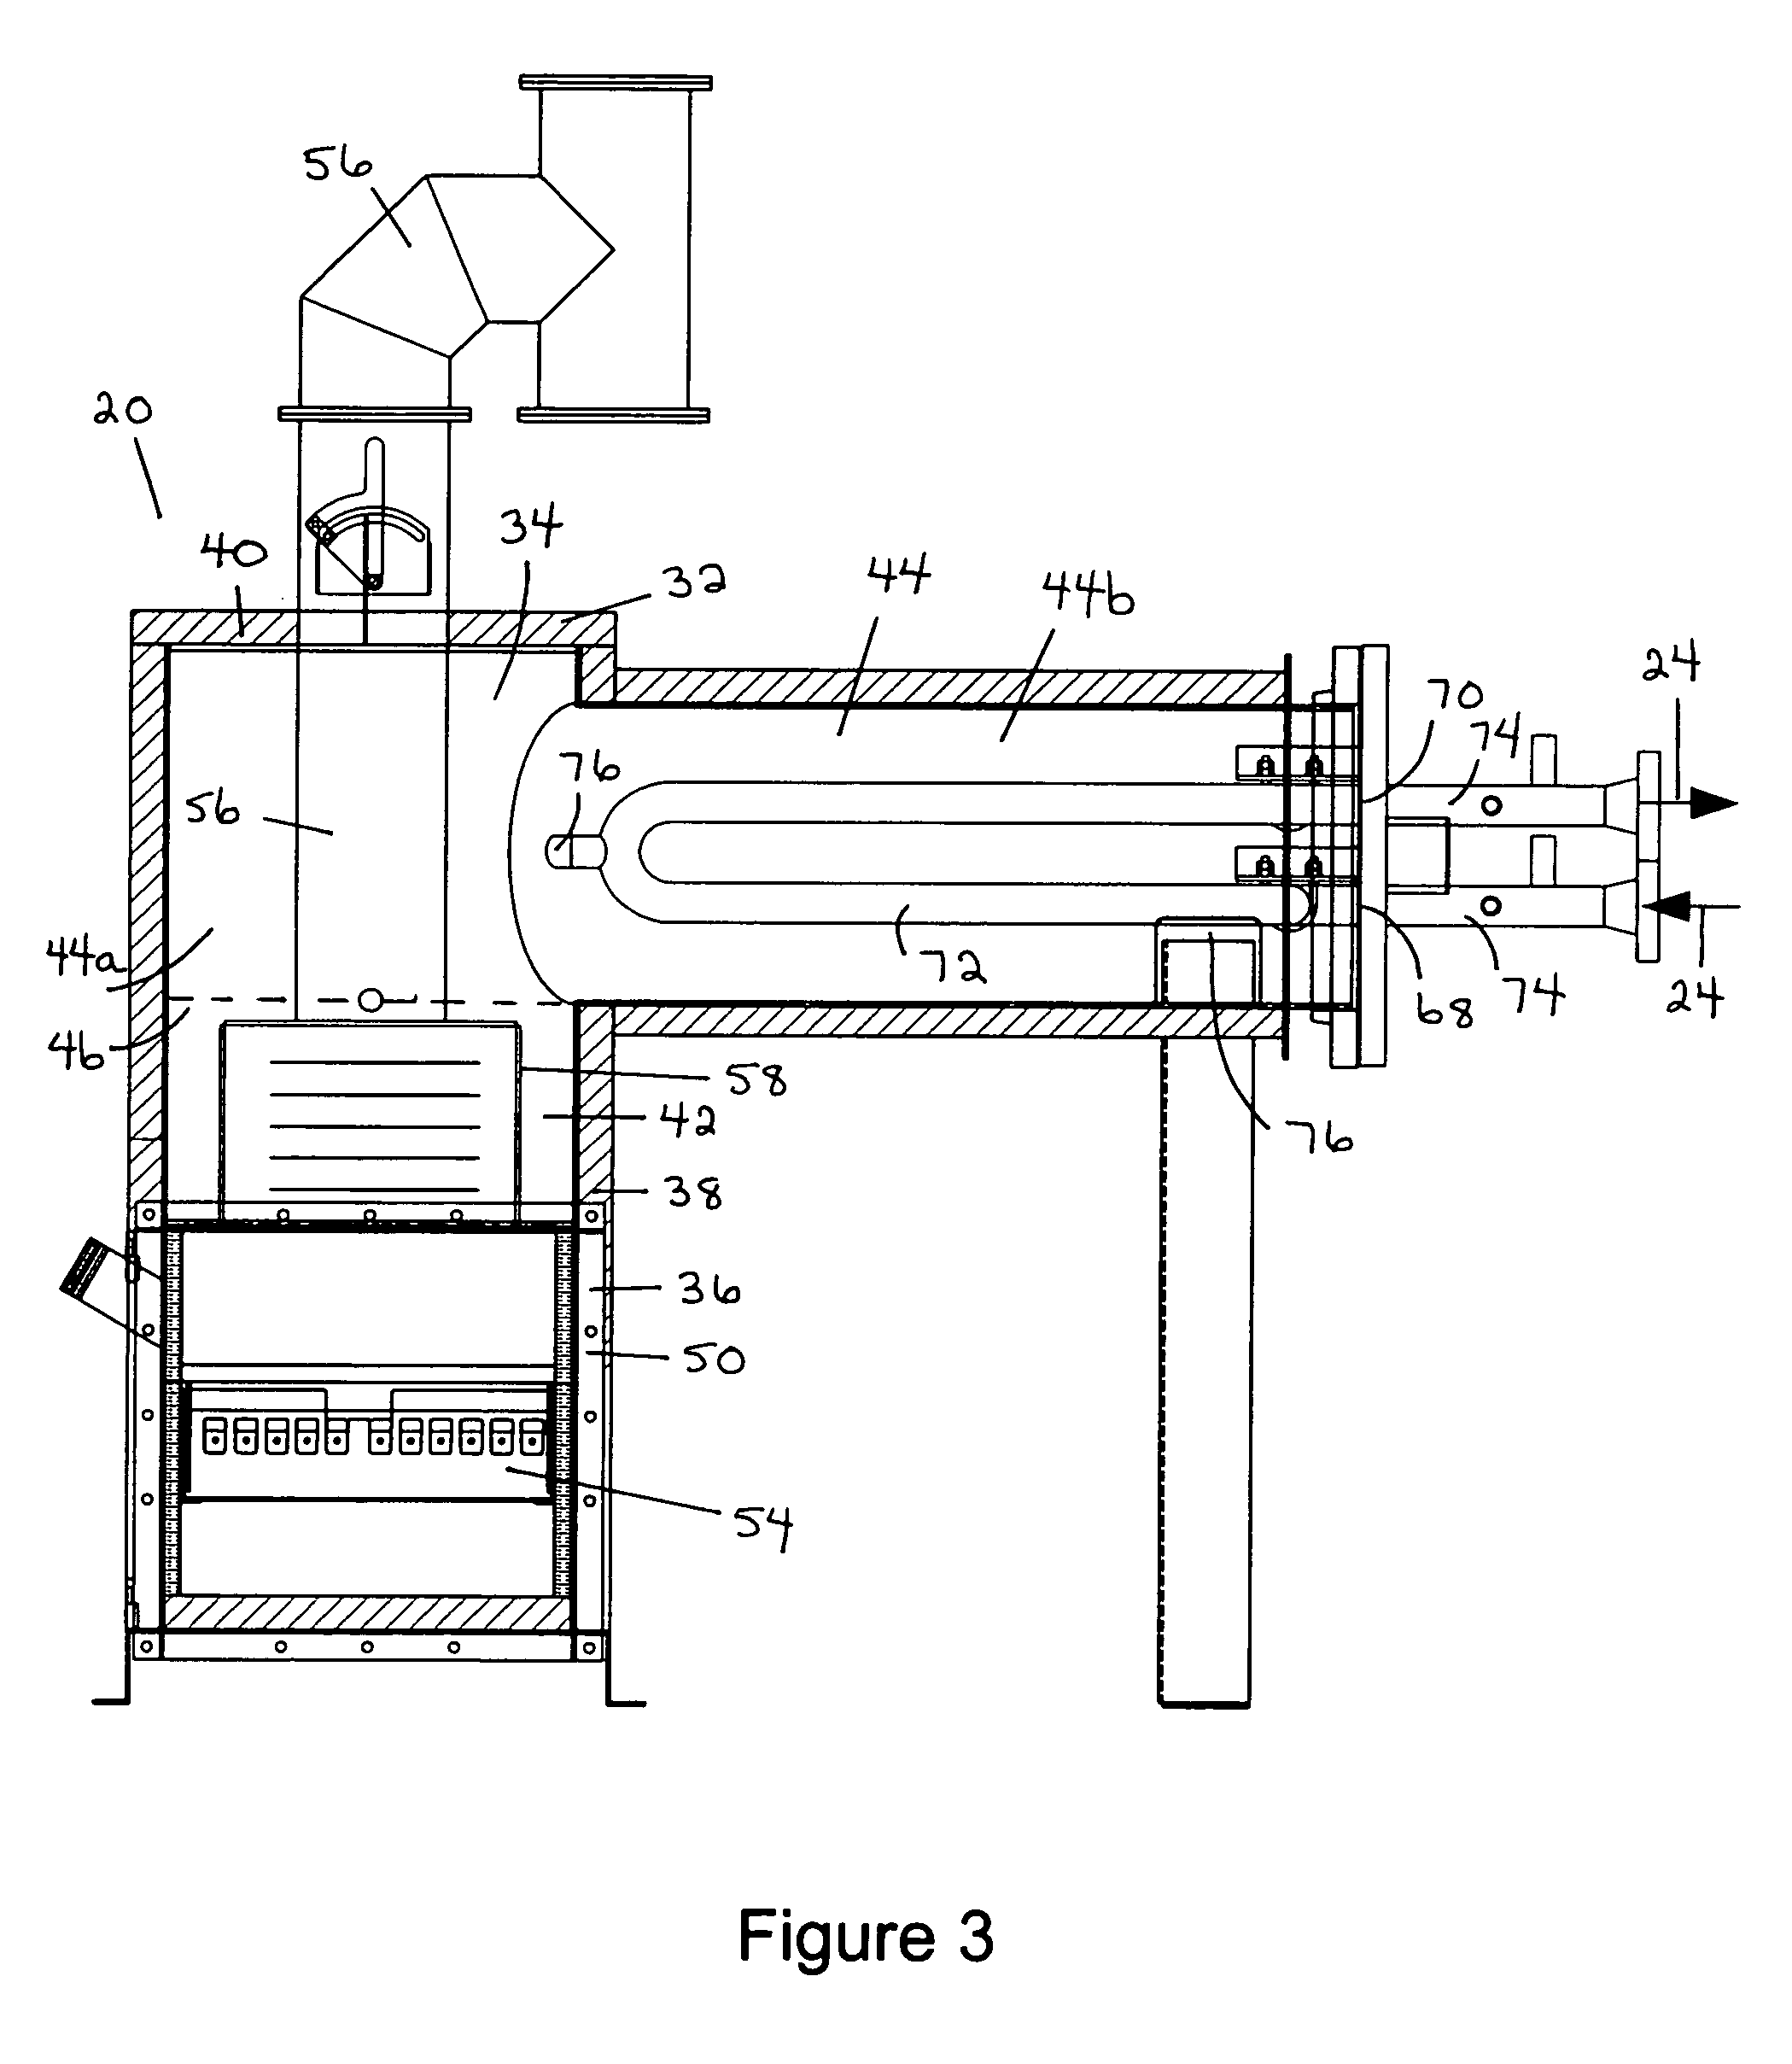 Heat exchange apparatus